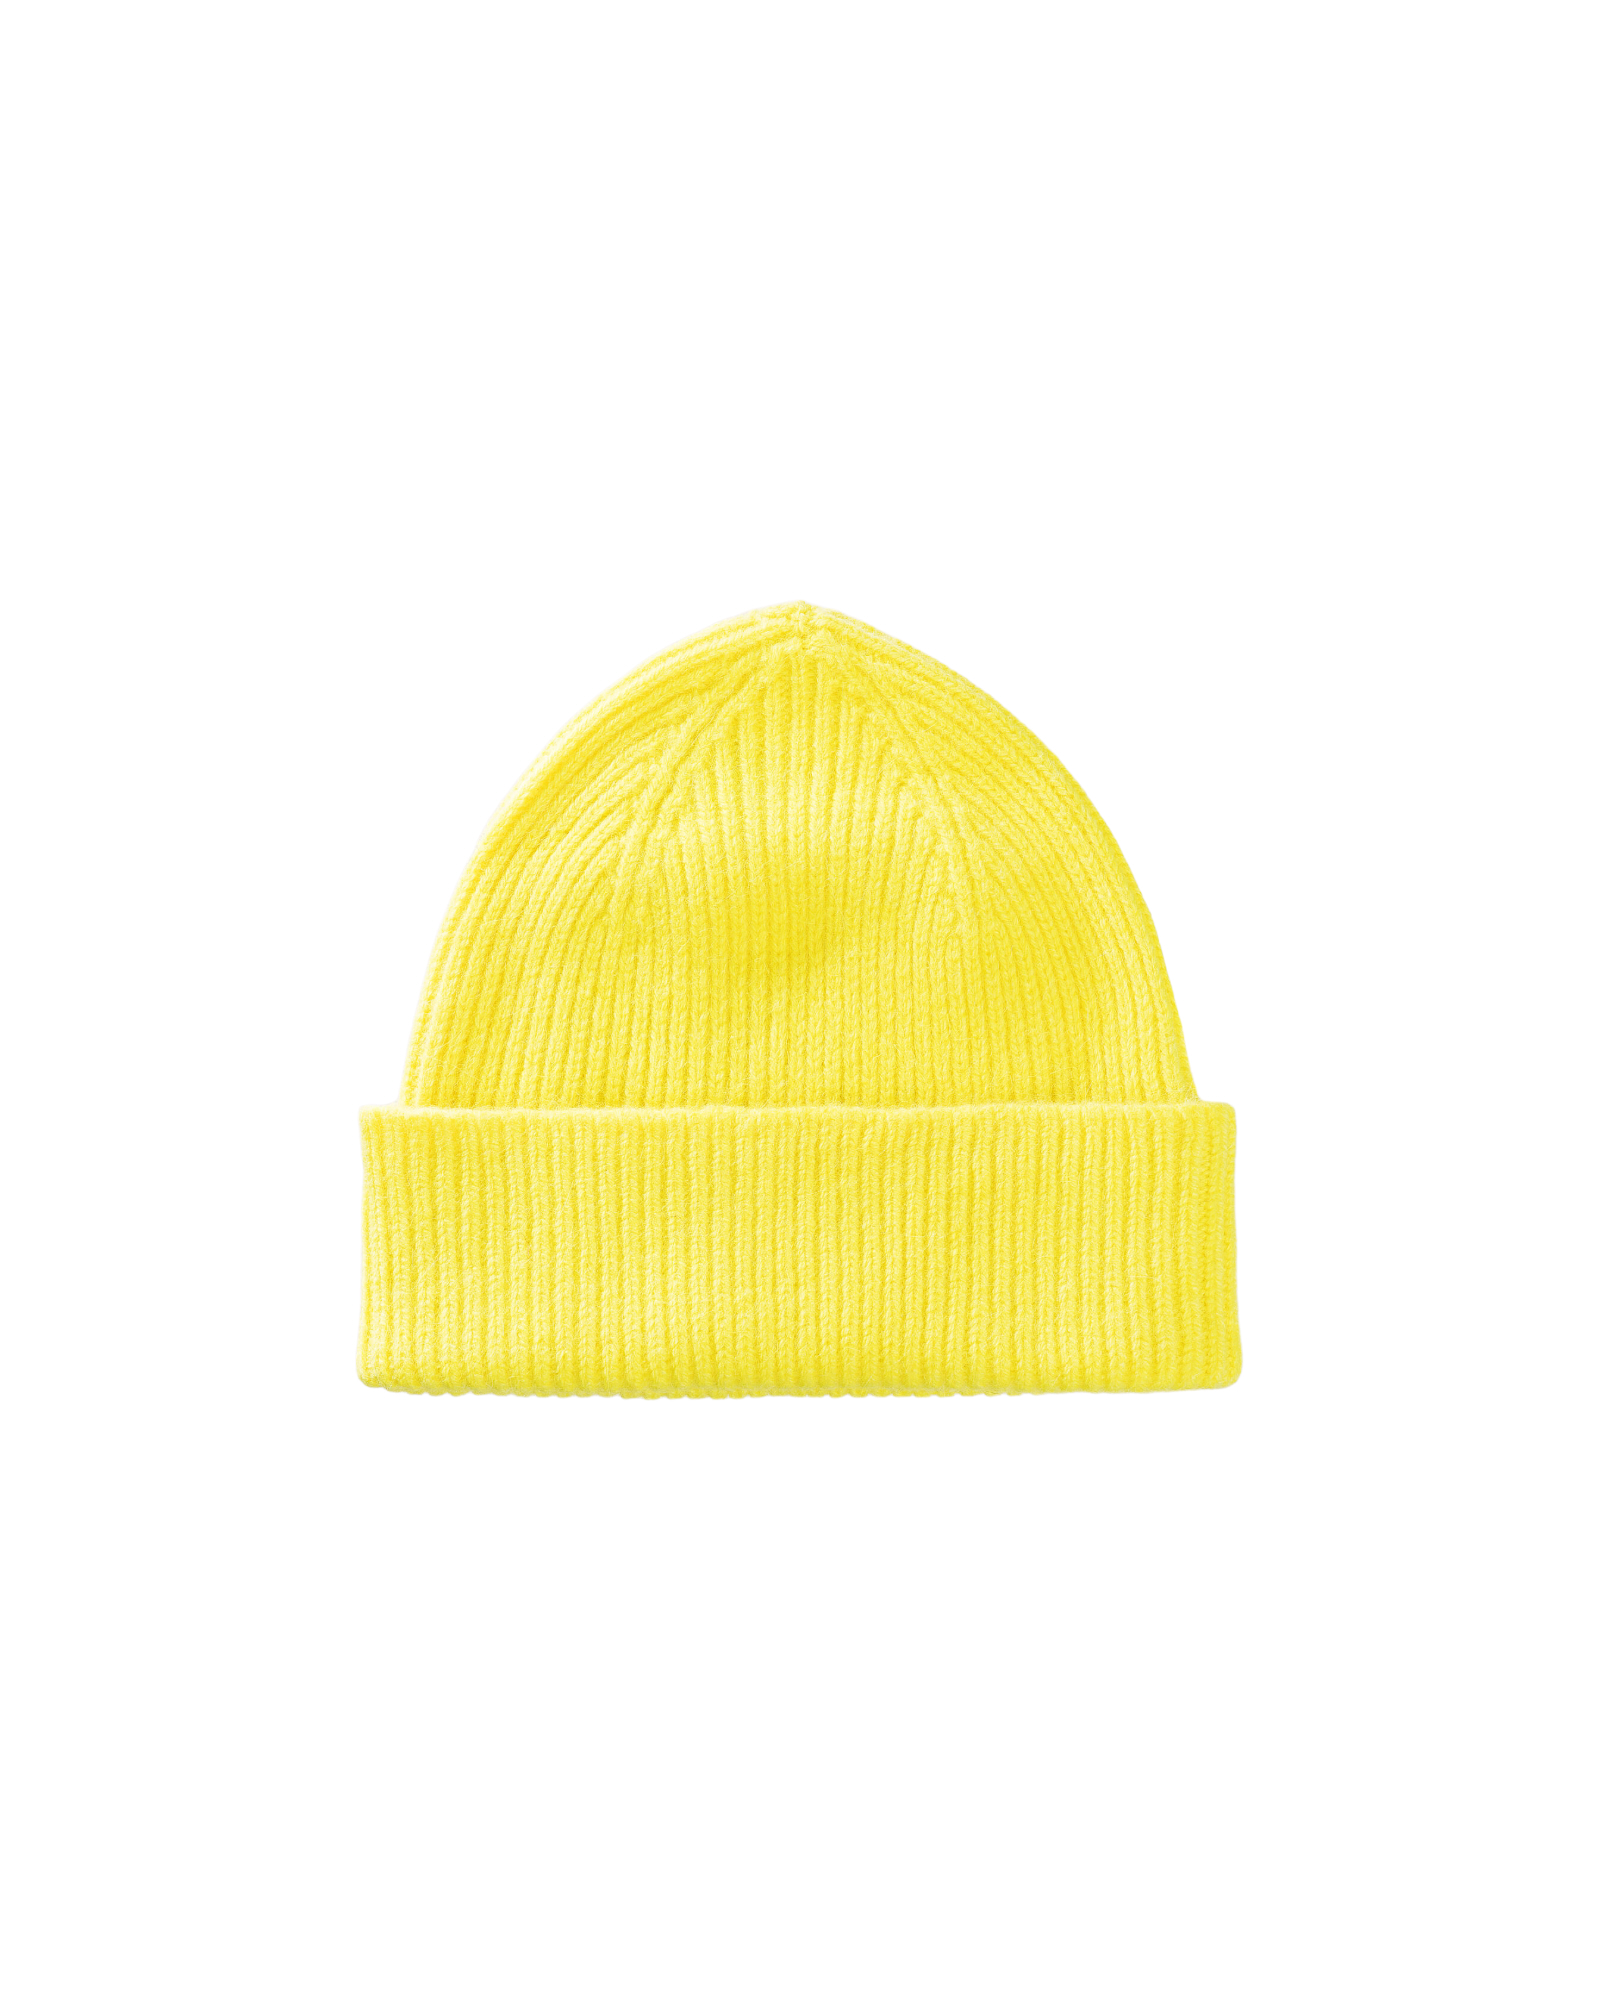 Mütze, yellow, Le Bonnet, Beanie